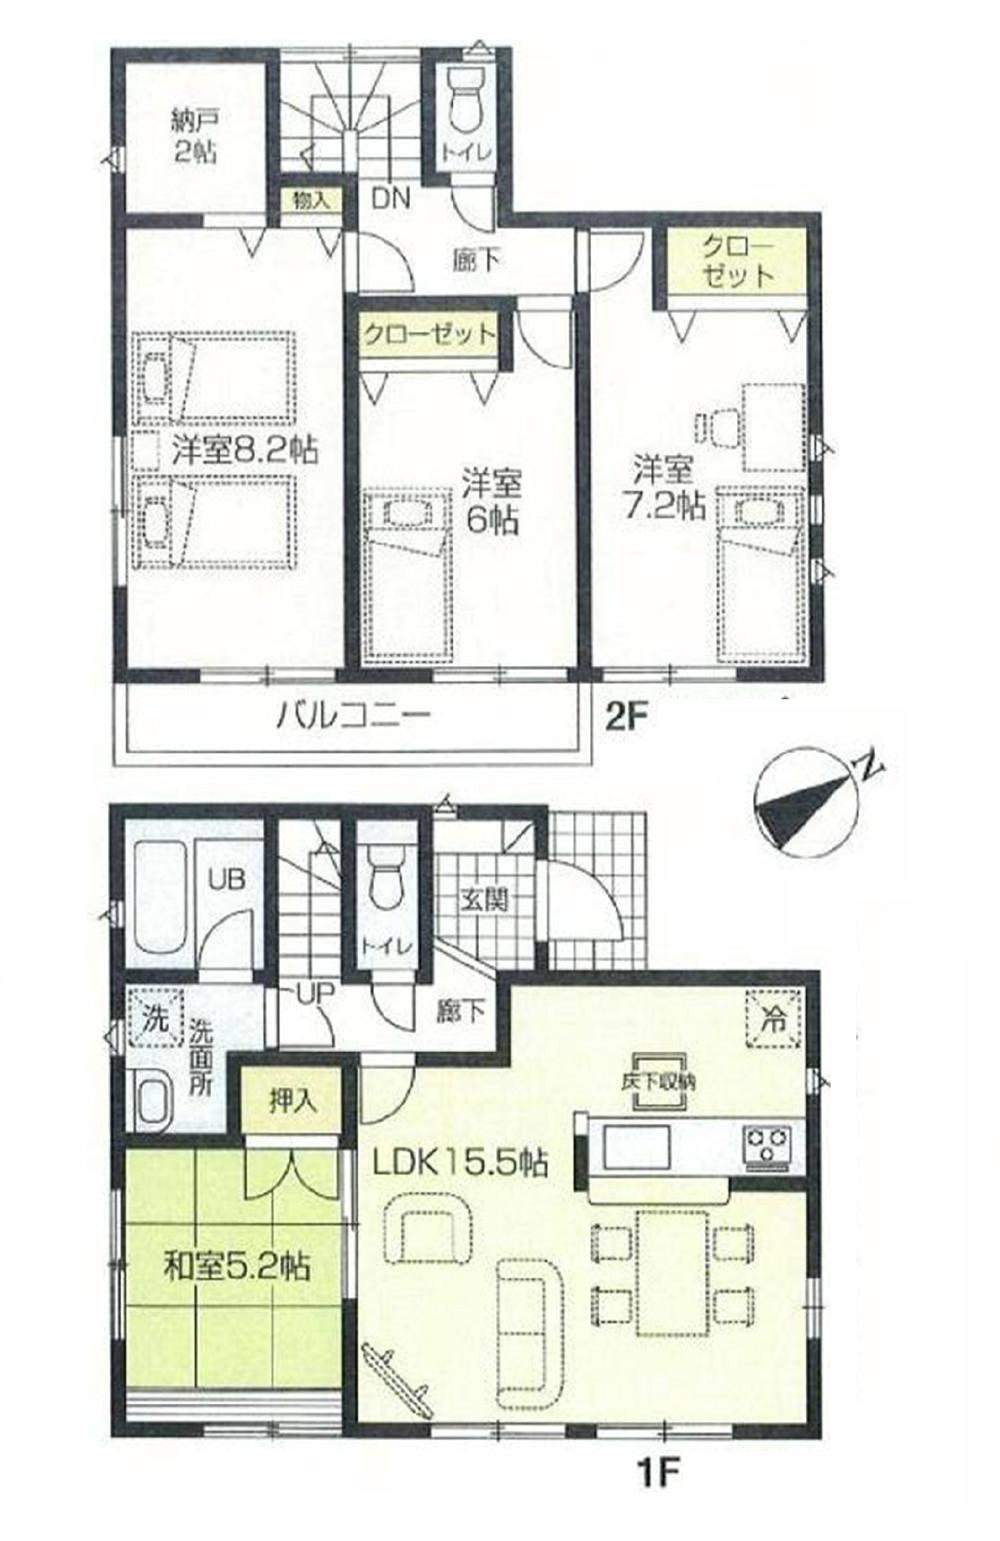 Floor plan. Price 25,800,000 yen, 4LDK+S, Land area 132.68 sq m , Building area 96.79 sq m